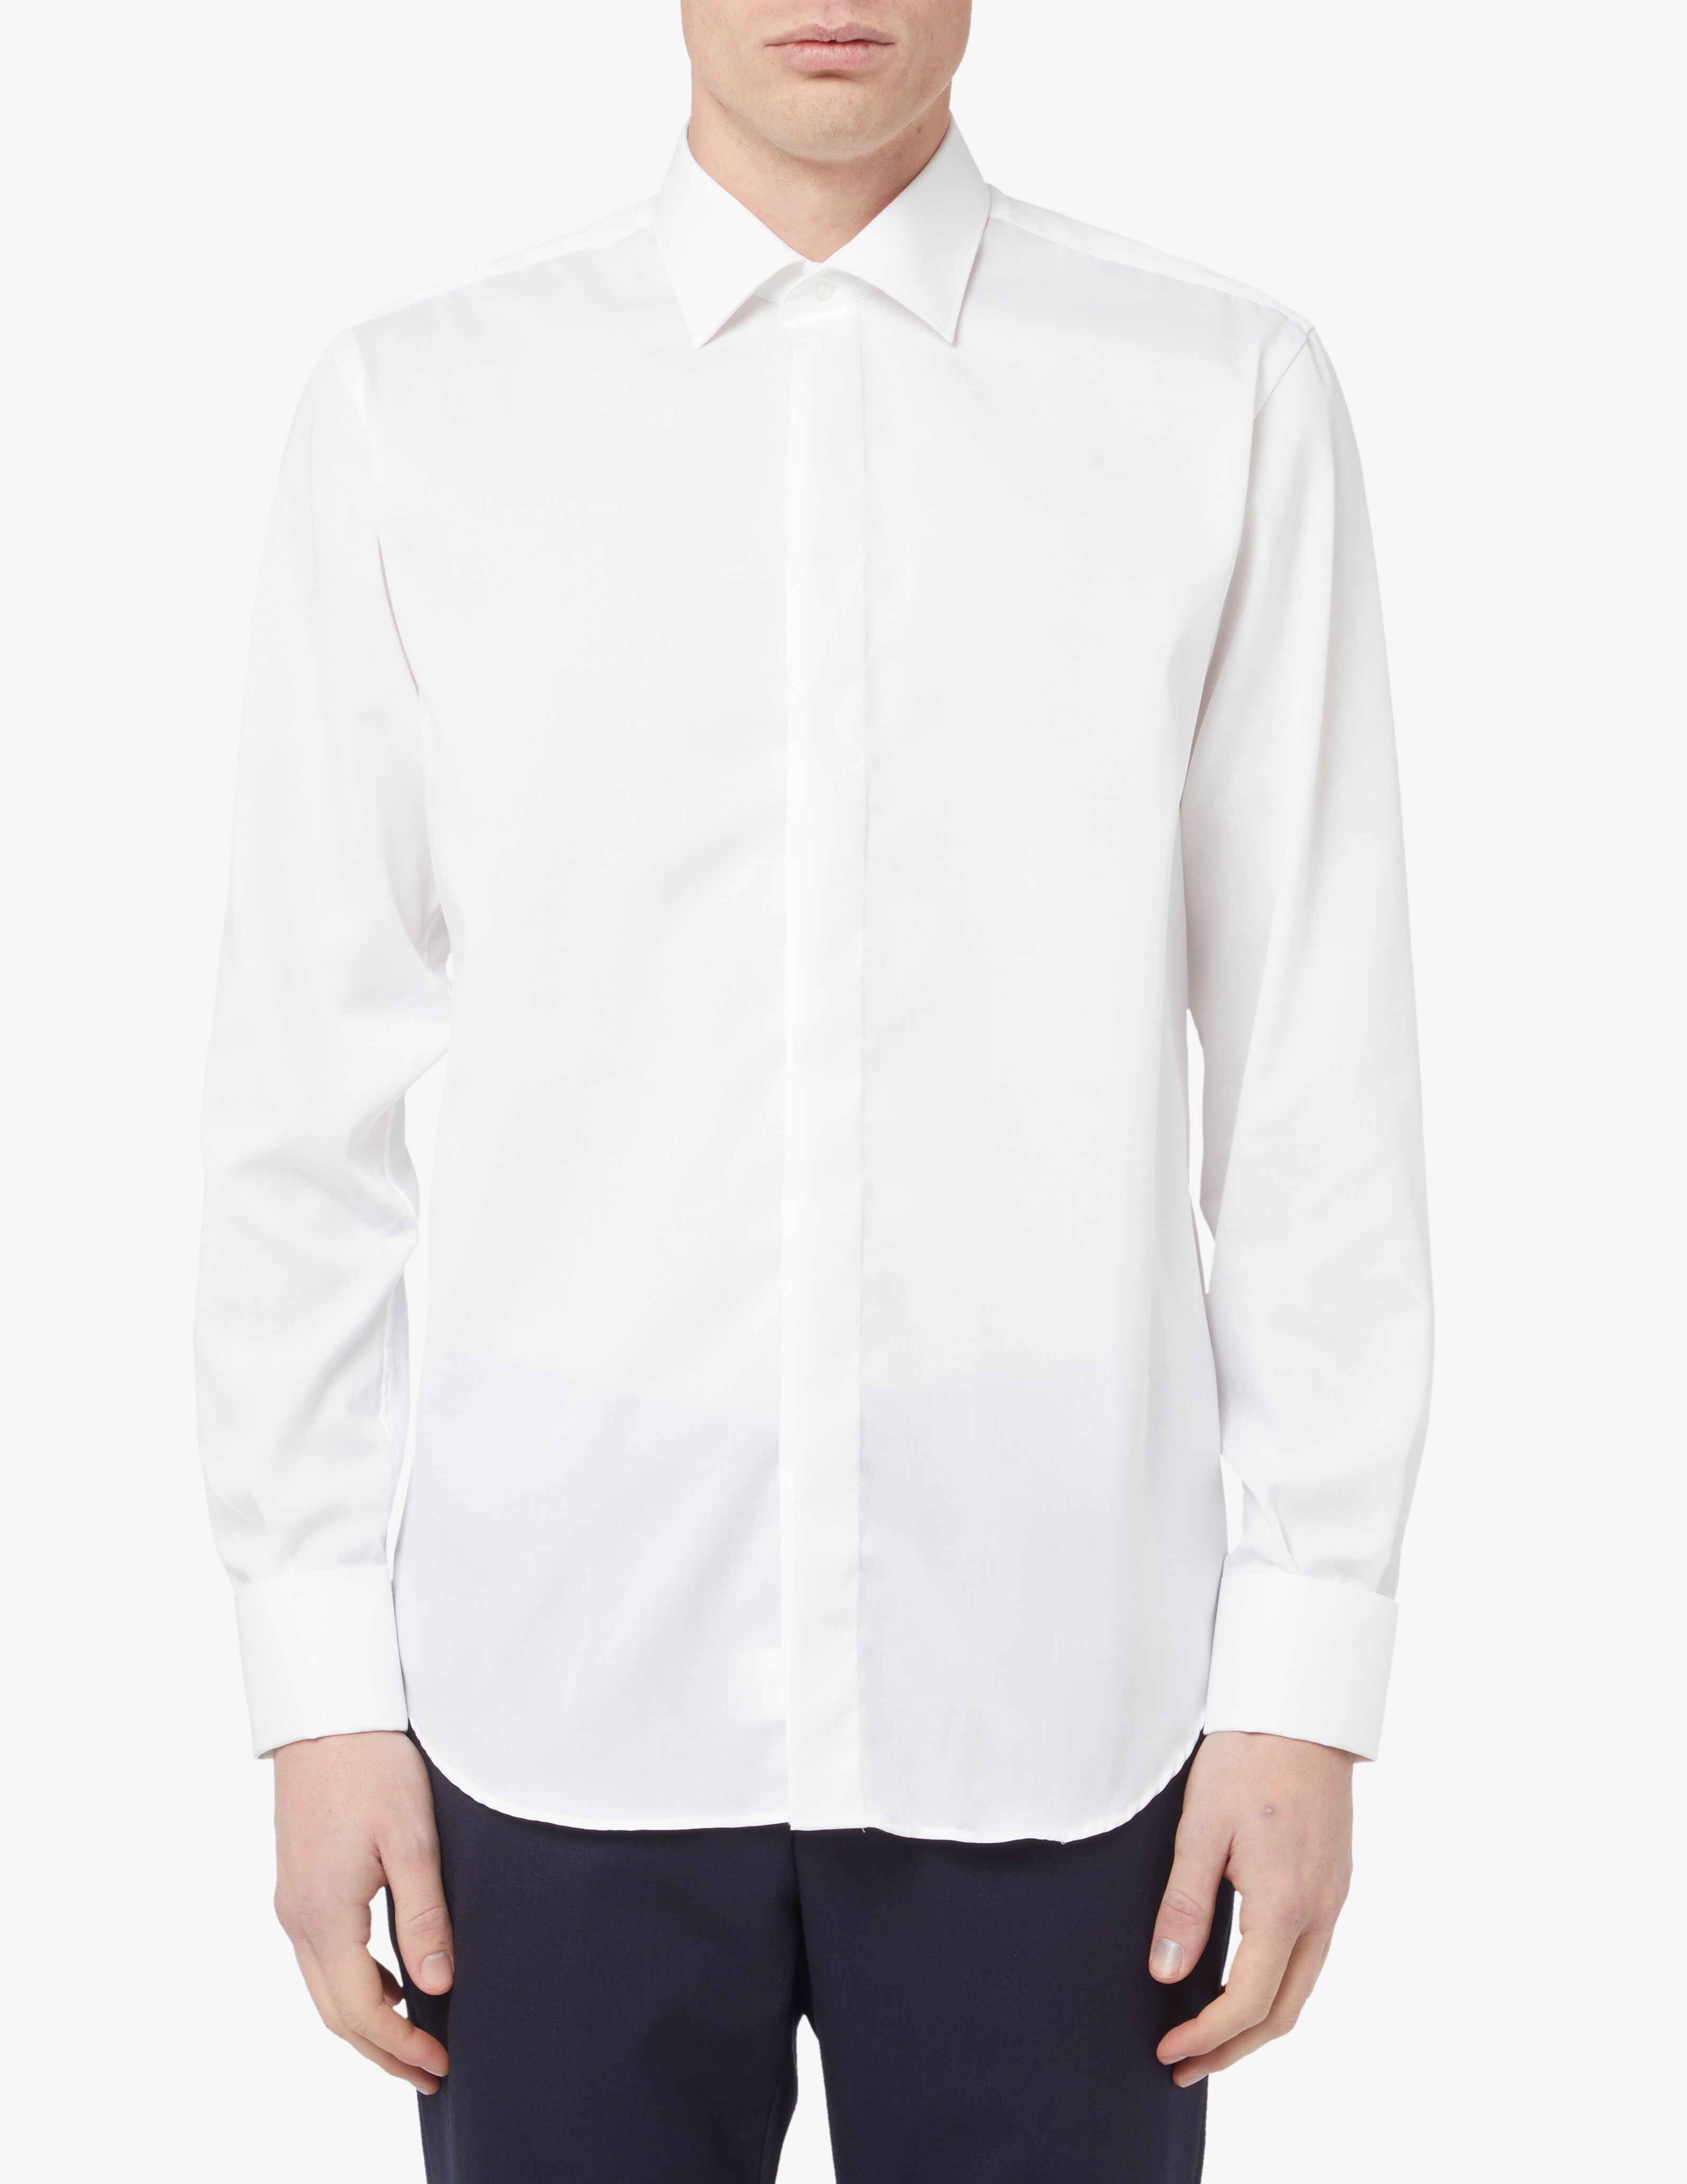 Рубашка стандартный дипломатический воротник без утюга Sartoria Italiana, белый цена и фото